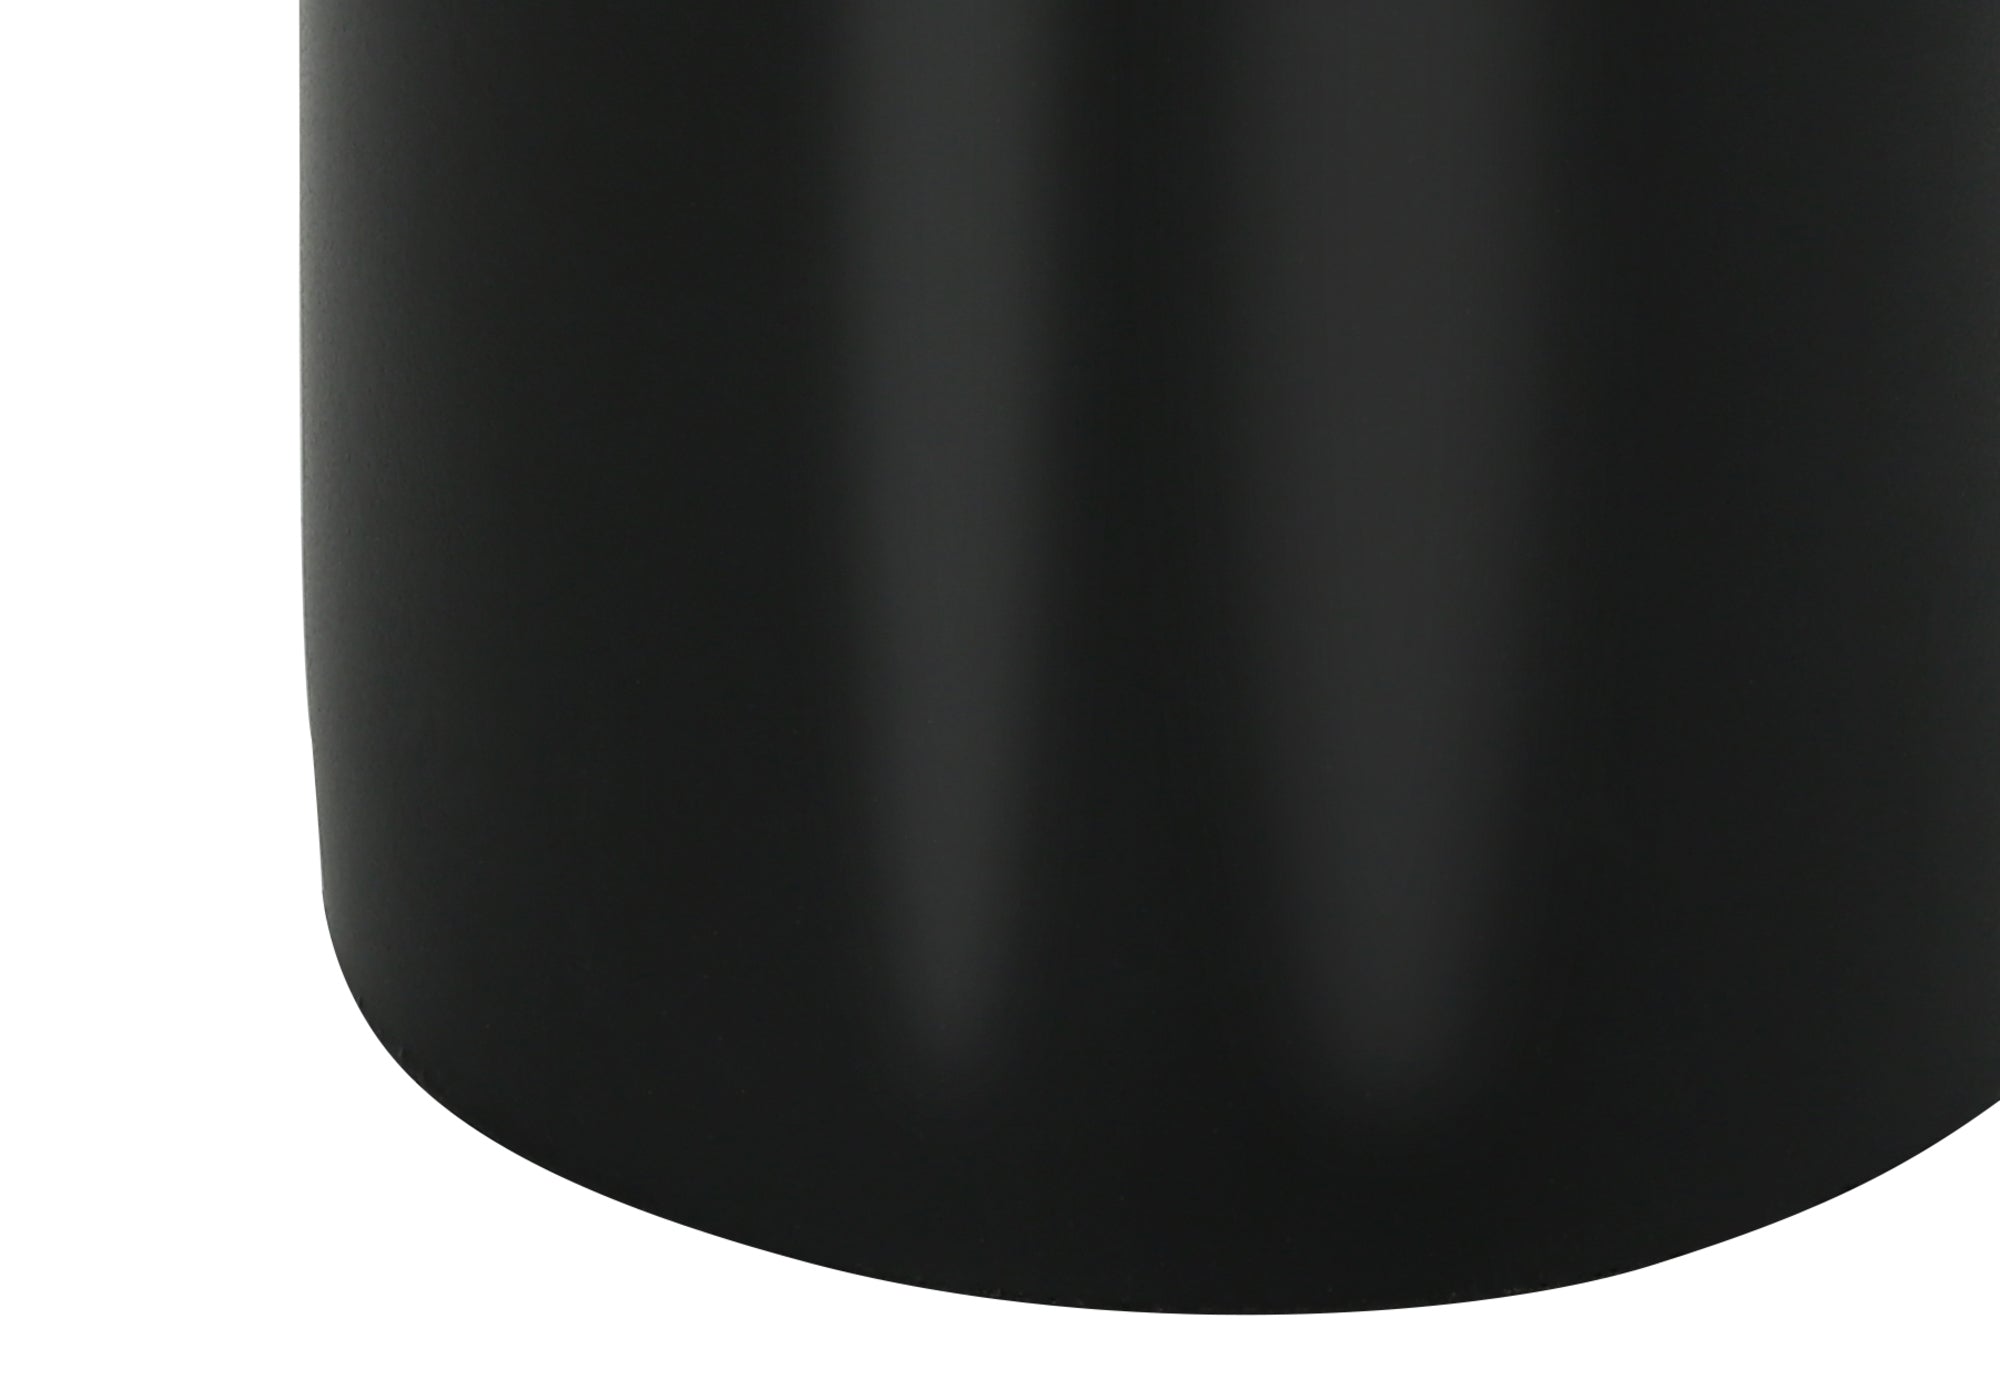 MN-119629    Lighting, 25"H, Table Lamp, Black Concrete, Black Shade, Contemporary